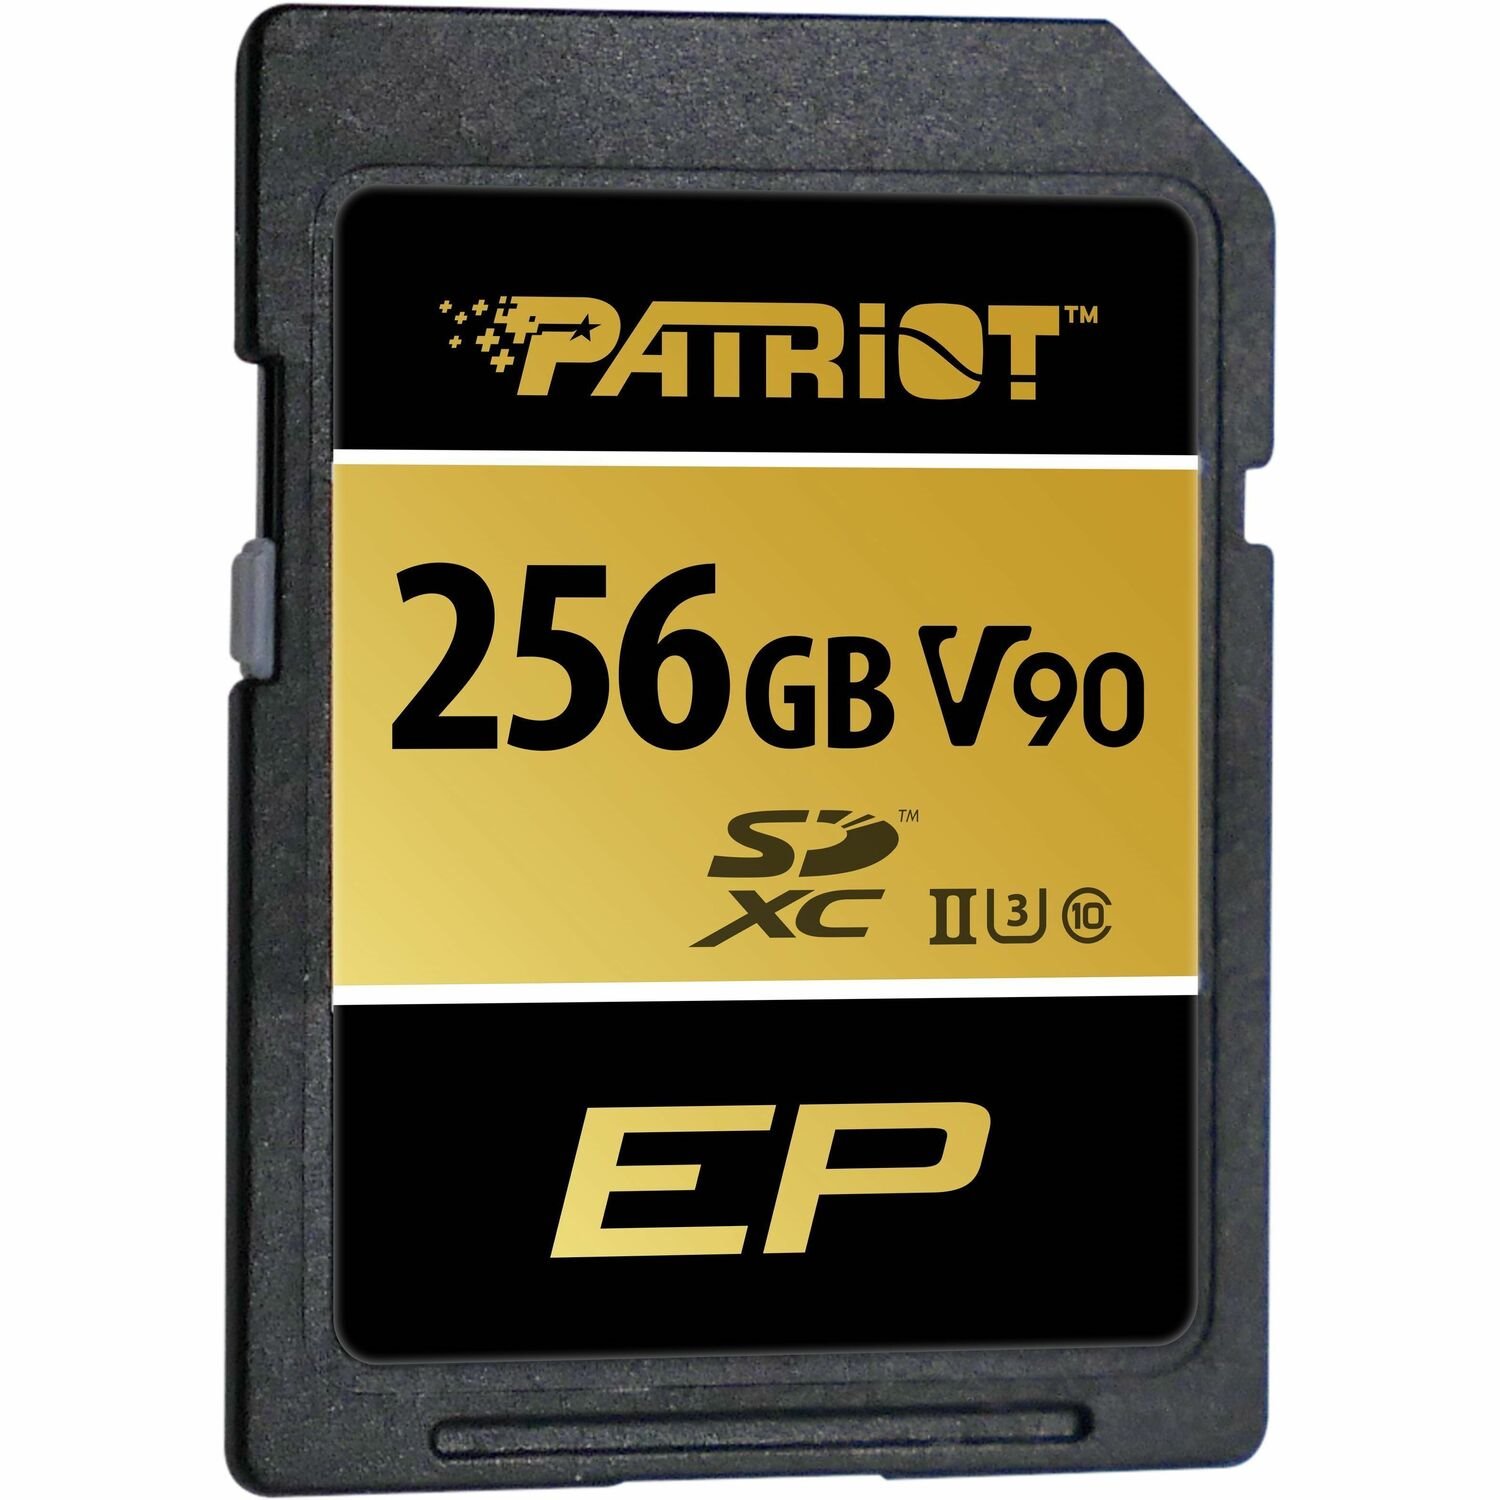 Patriot Memory 256 GB Class 10/UHS-II (U3) V90 SDXC - 1 Pack